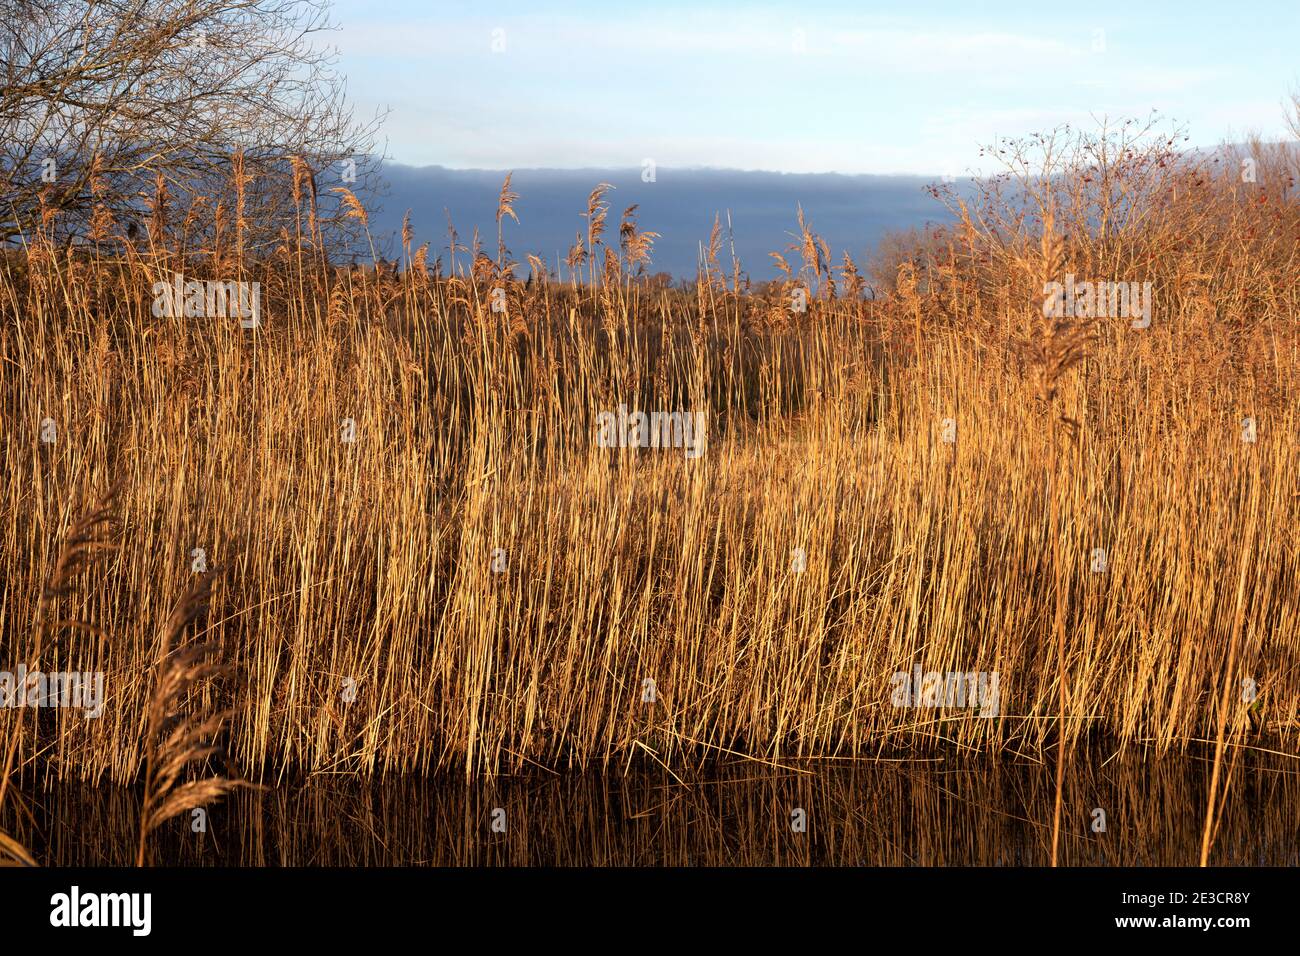 East Anglia fens landscape and vegetation - sedge grass and reeds, Burwell Fen, Burwell, Cambridgeshire UK Stock Photo